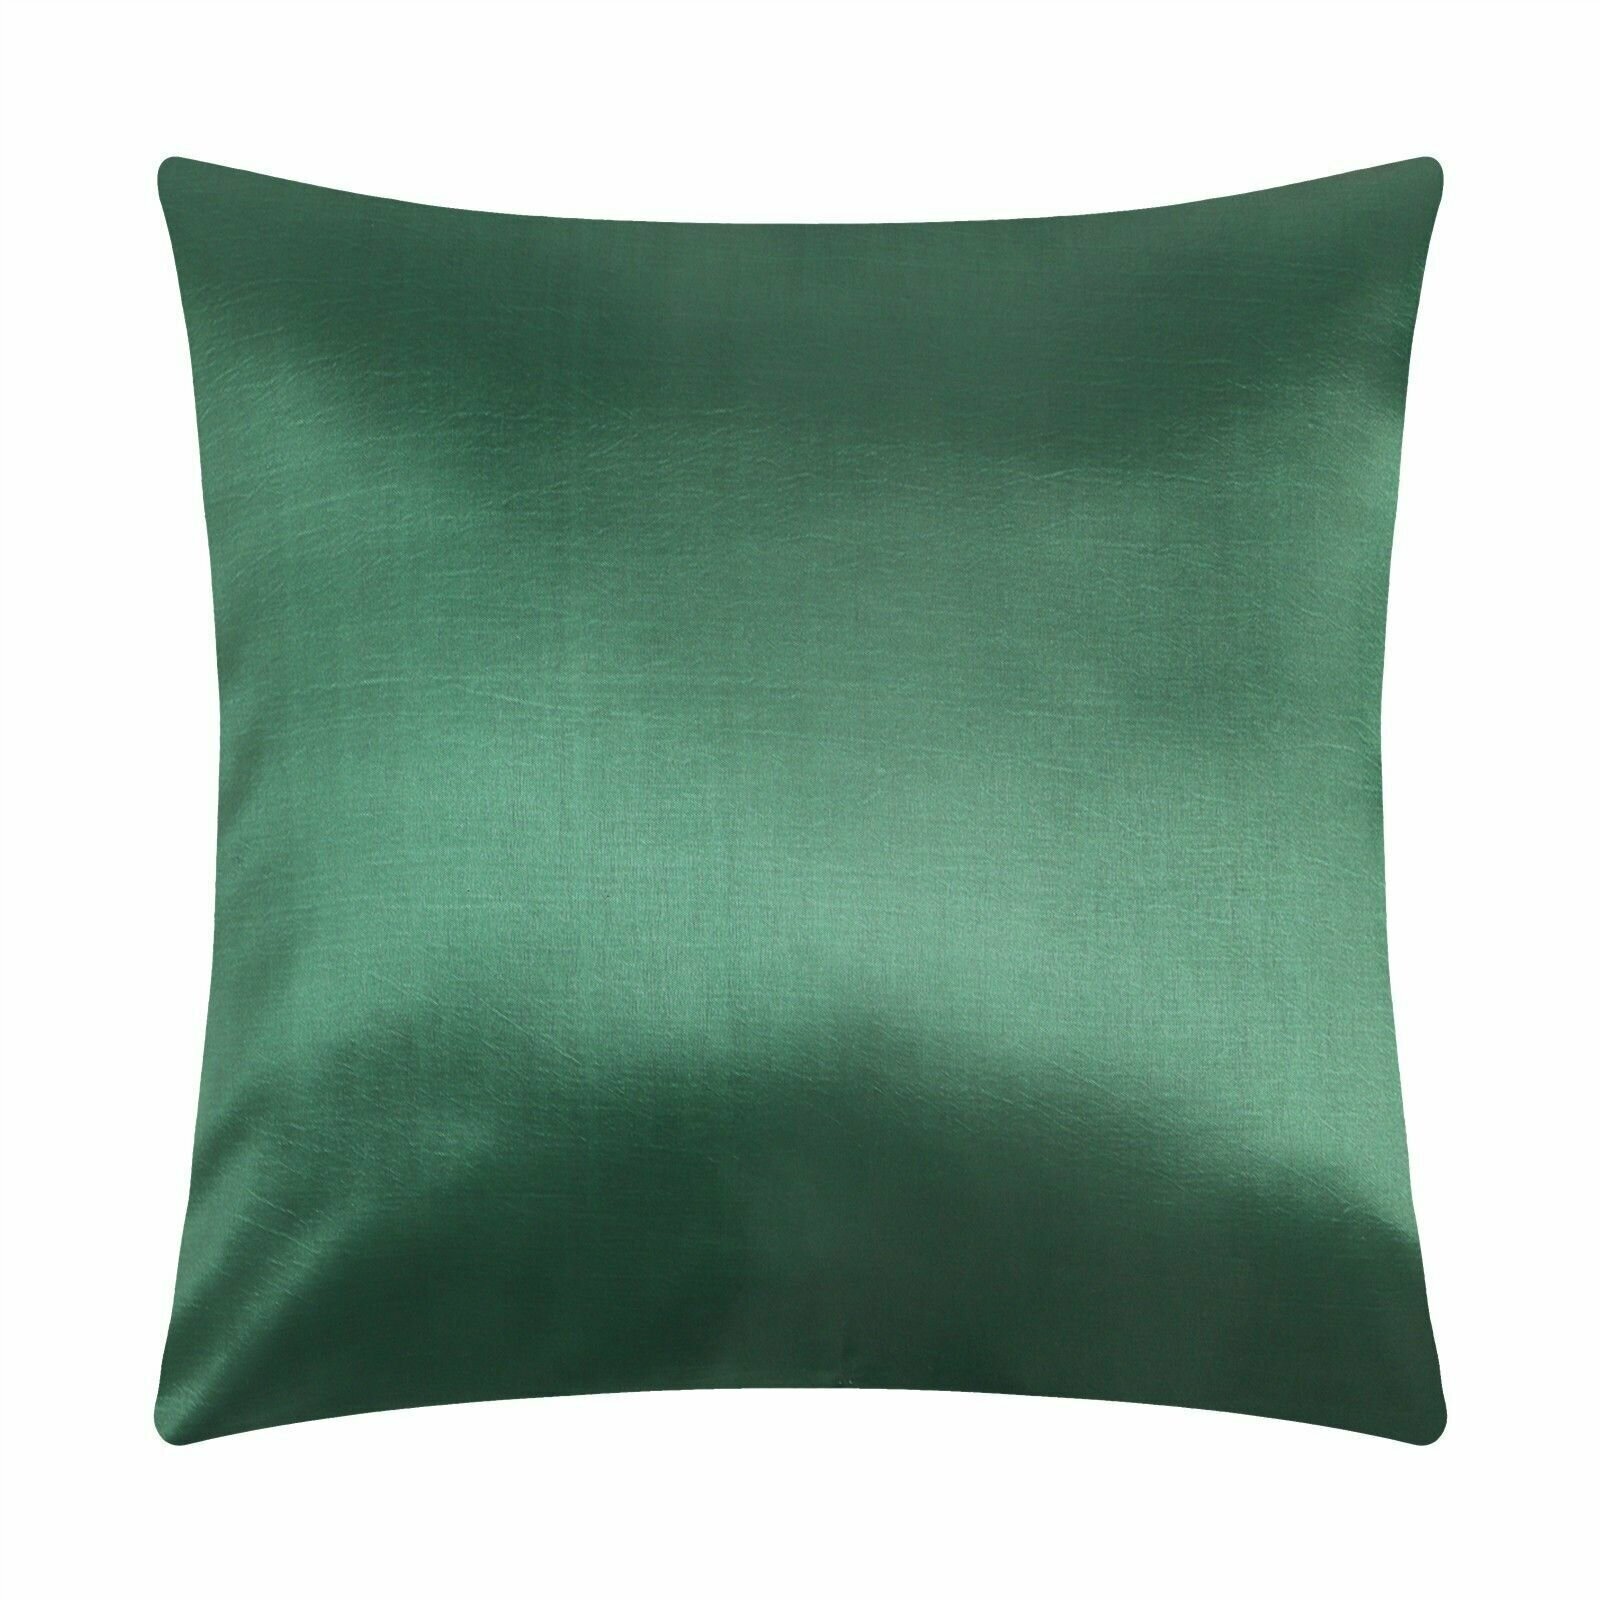 Чехол на подушку Экономь и Я цв. зеленый 40 х 40 см 100% п/э